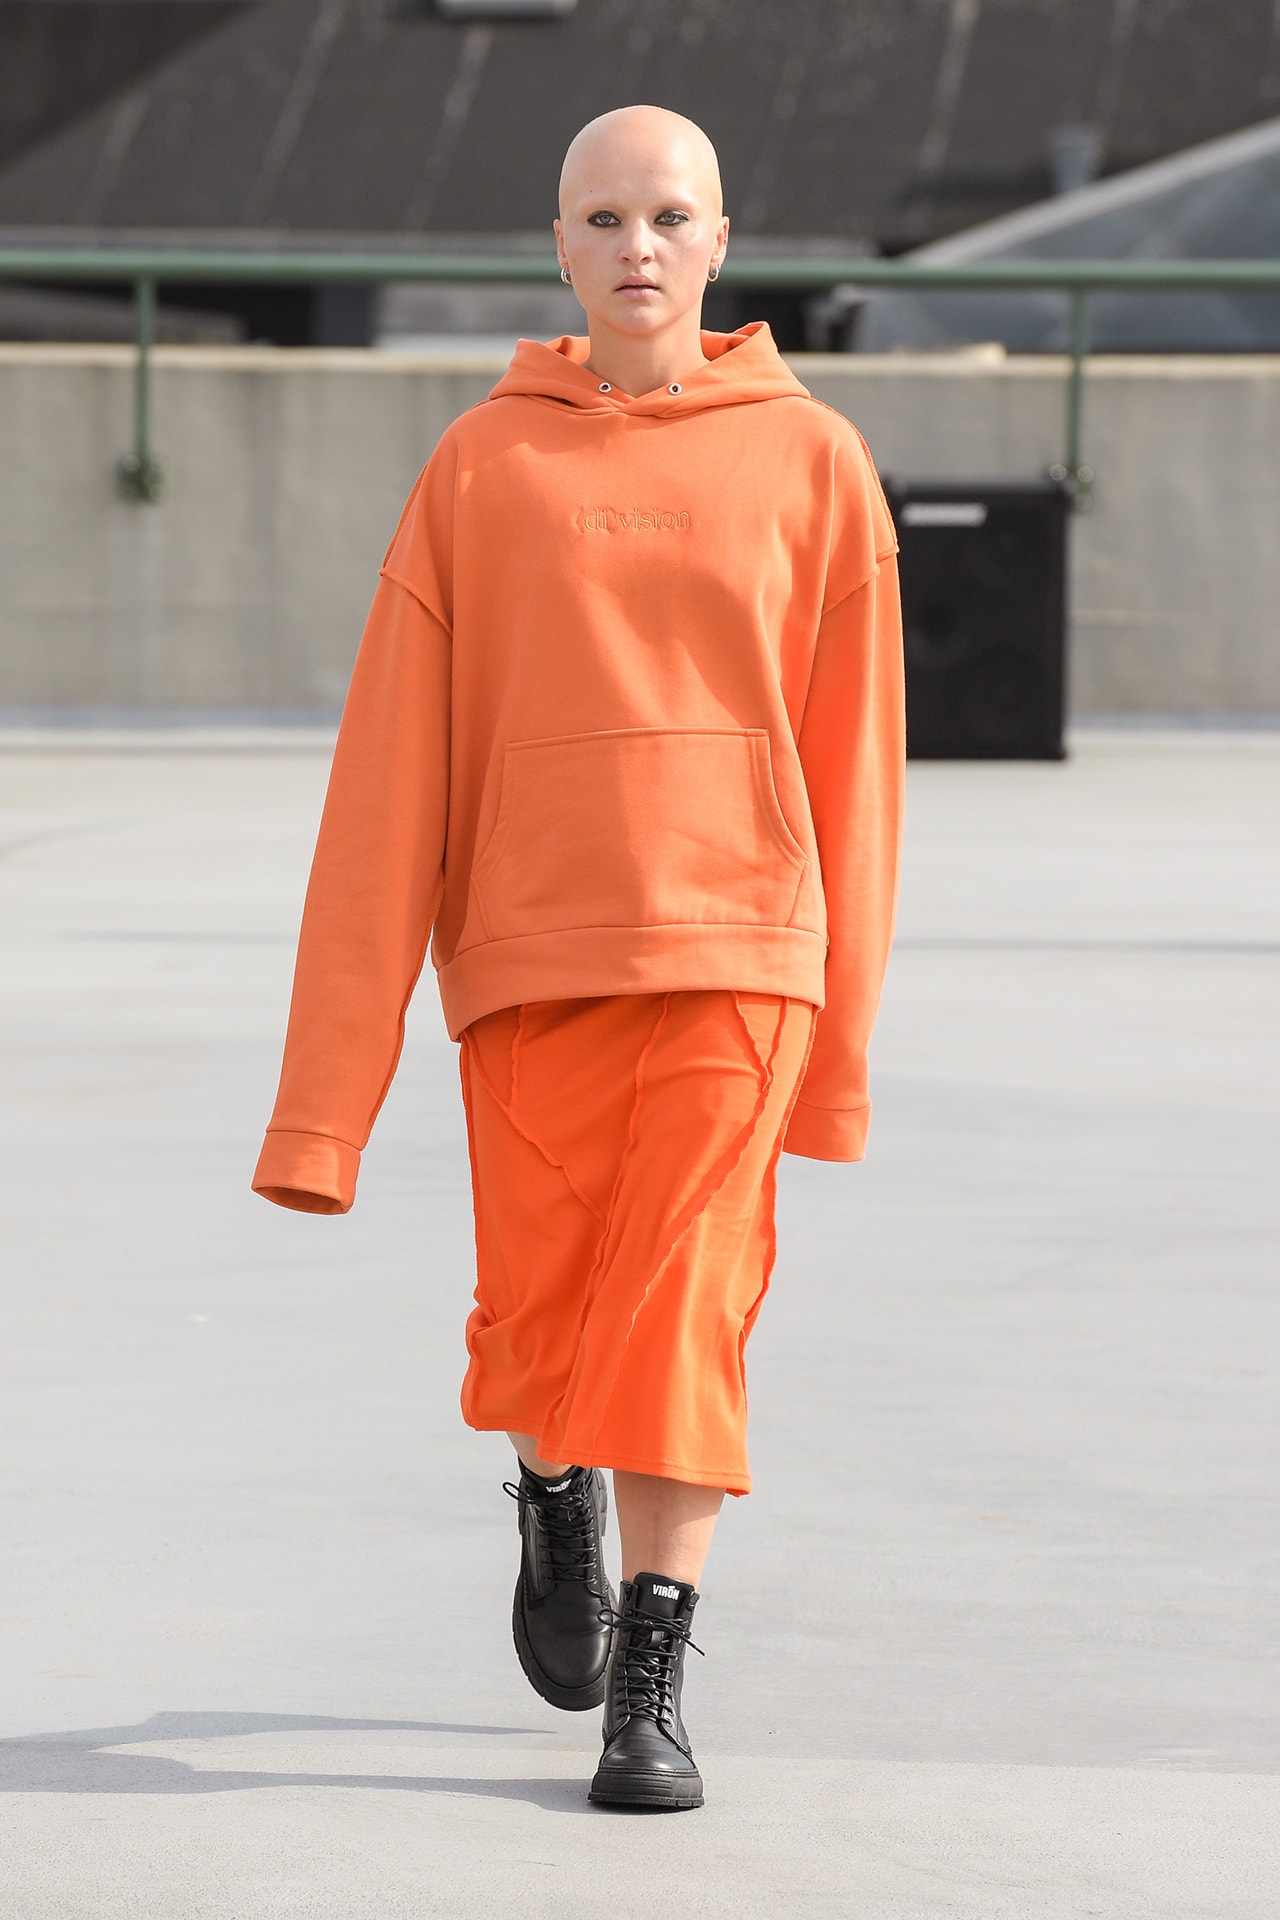 (di)vision Spring Summer 2022 runway show collection division Copenhagen Danish Brand Fashion Design Simon Nanna Wick upcycling orange hoodie skirt